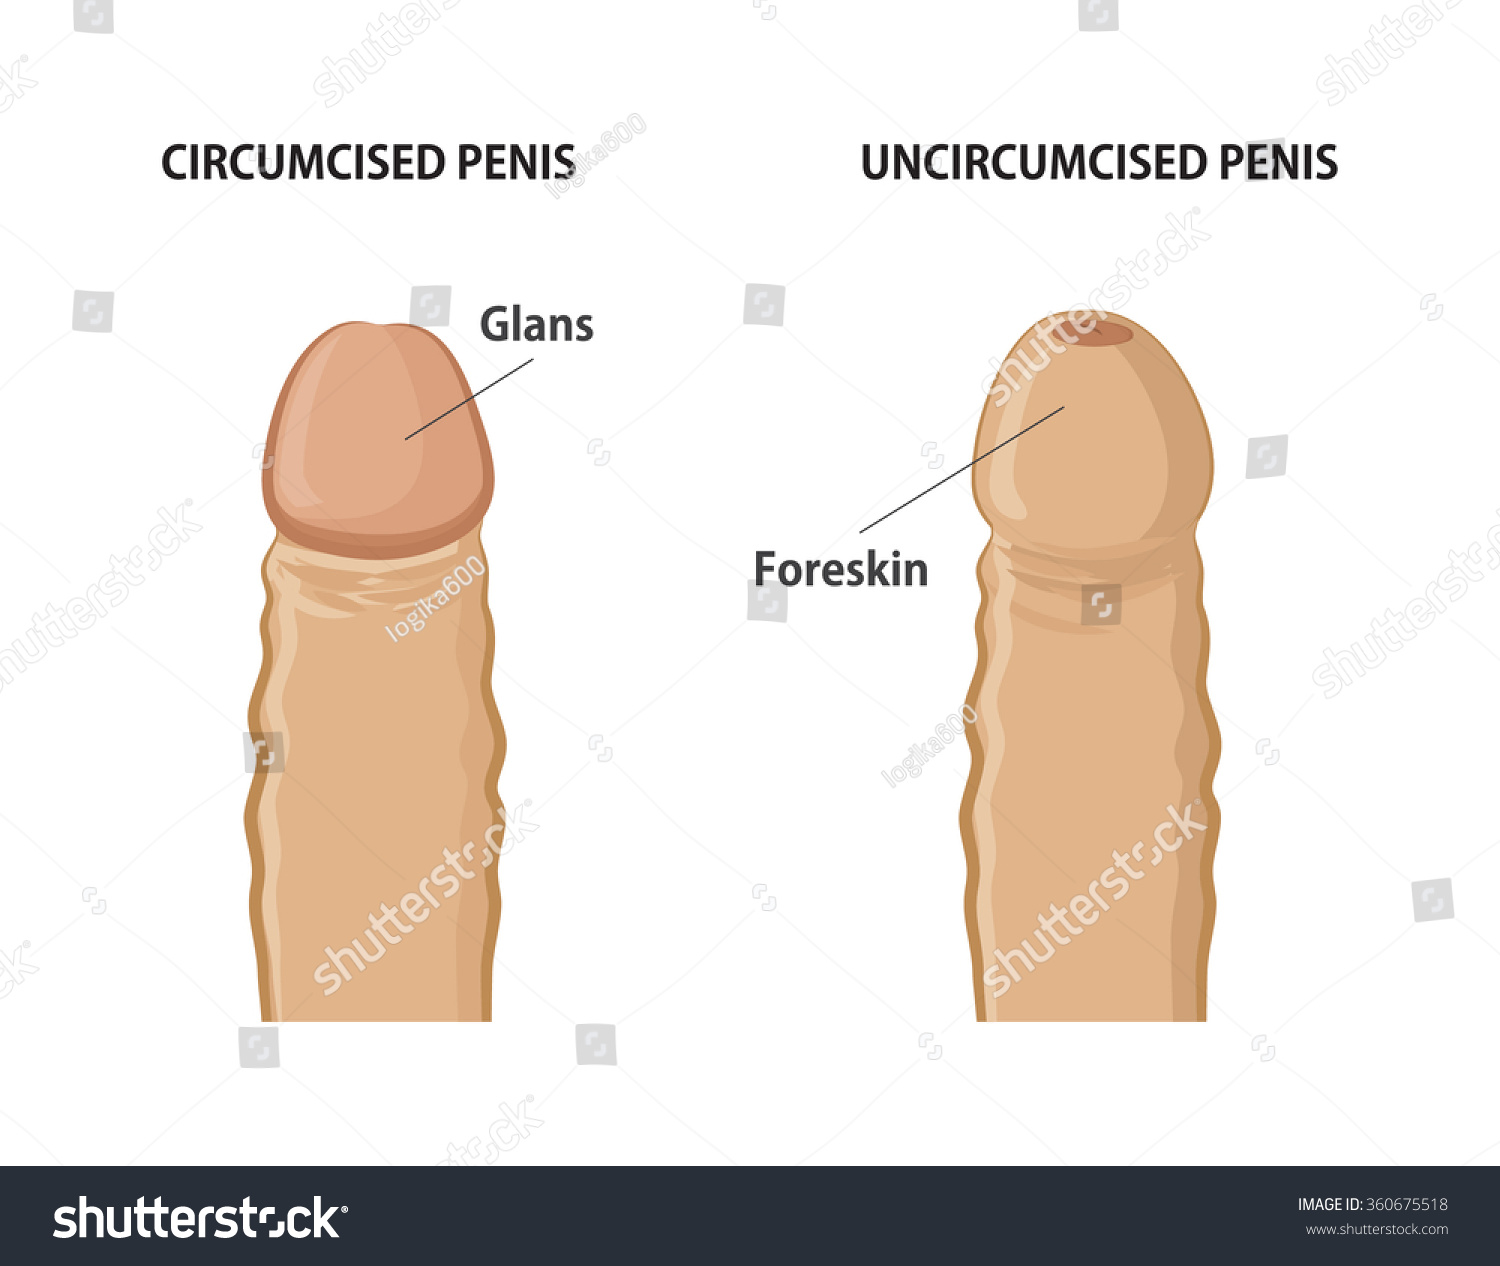 Pictures Of A Circumcised Penis 48